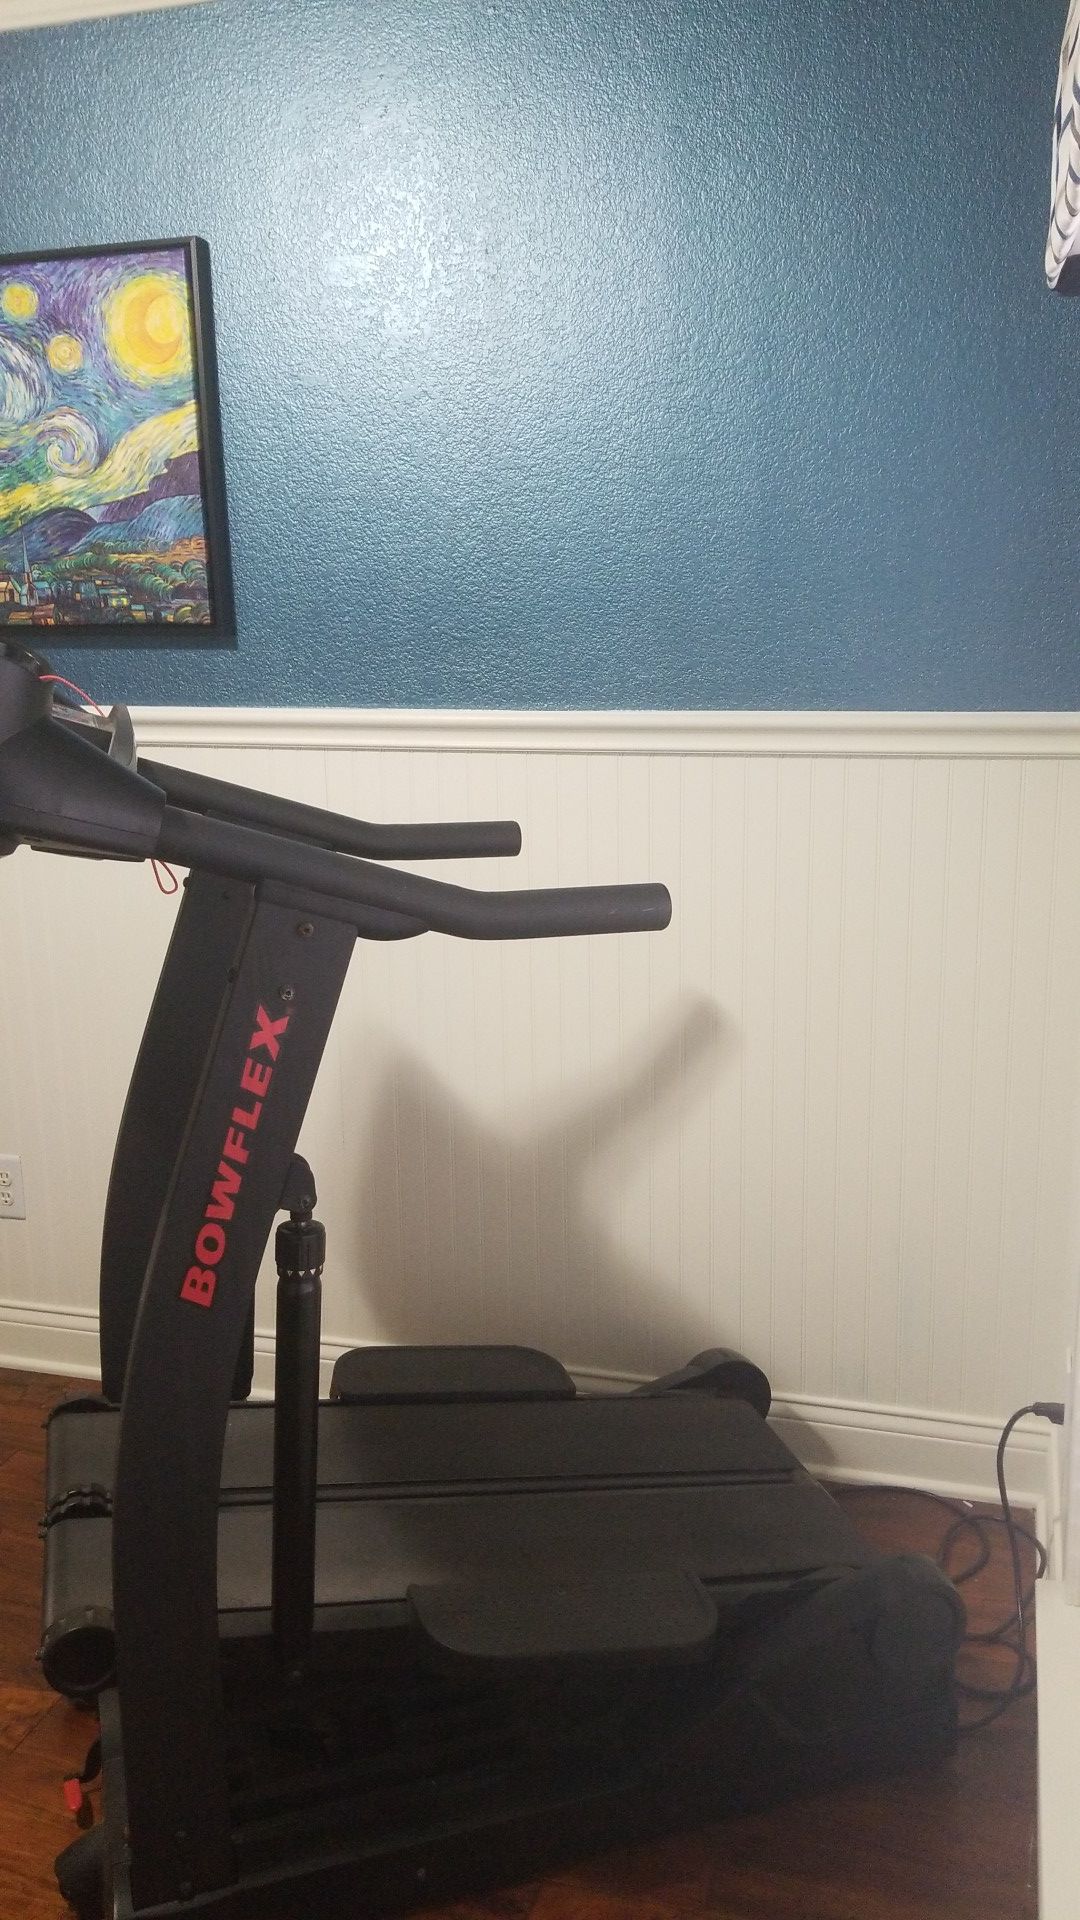 Treadmill/Treadclimber Bowflex TC5000 with manuals